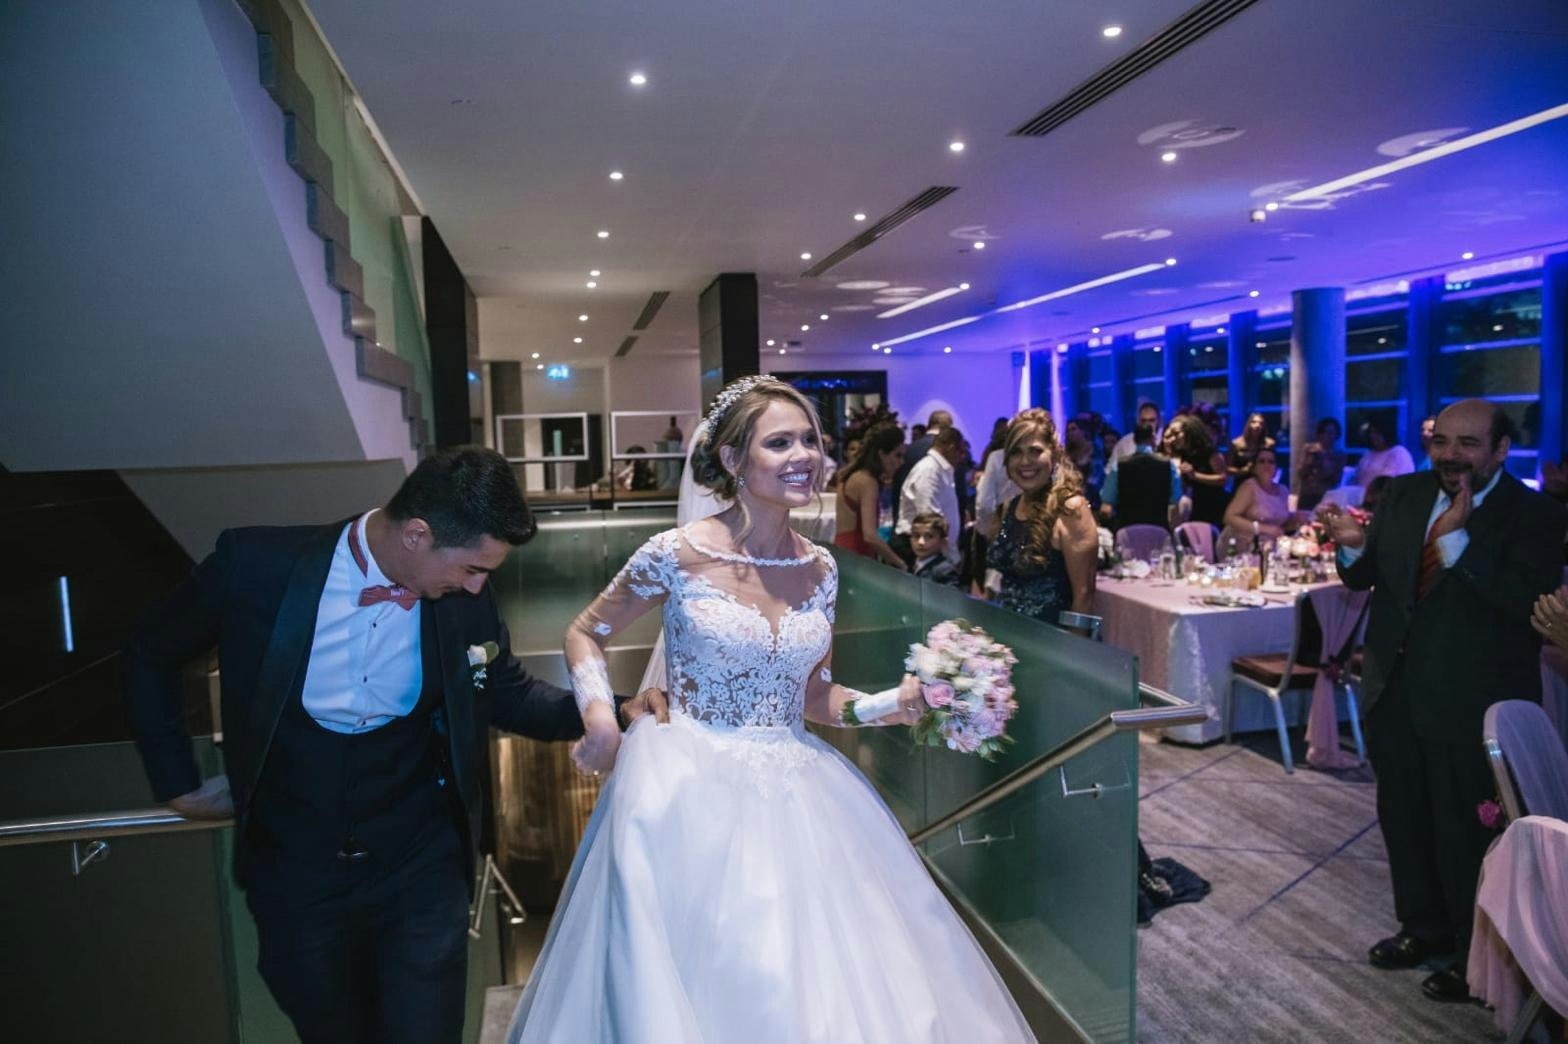 Affordable Wedding Venues in London - Hilton London Tower Bridge